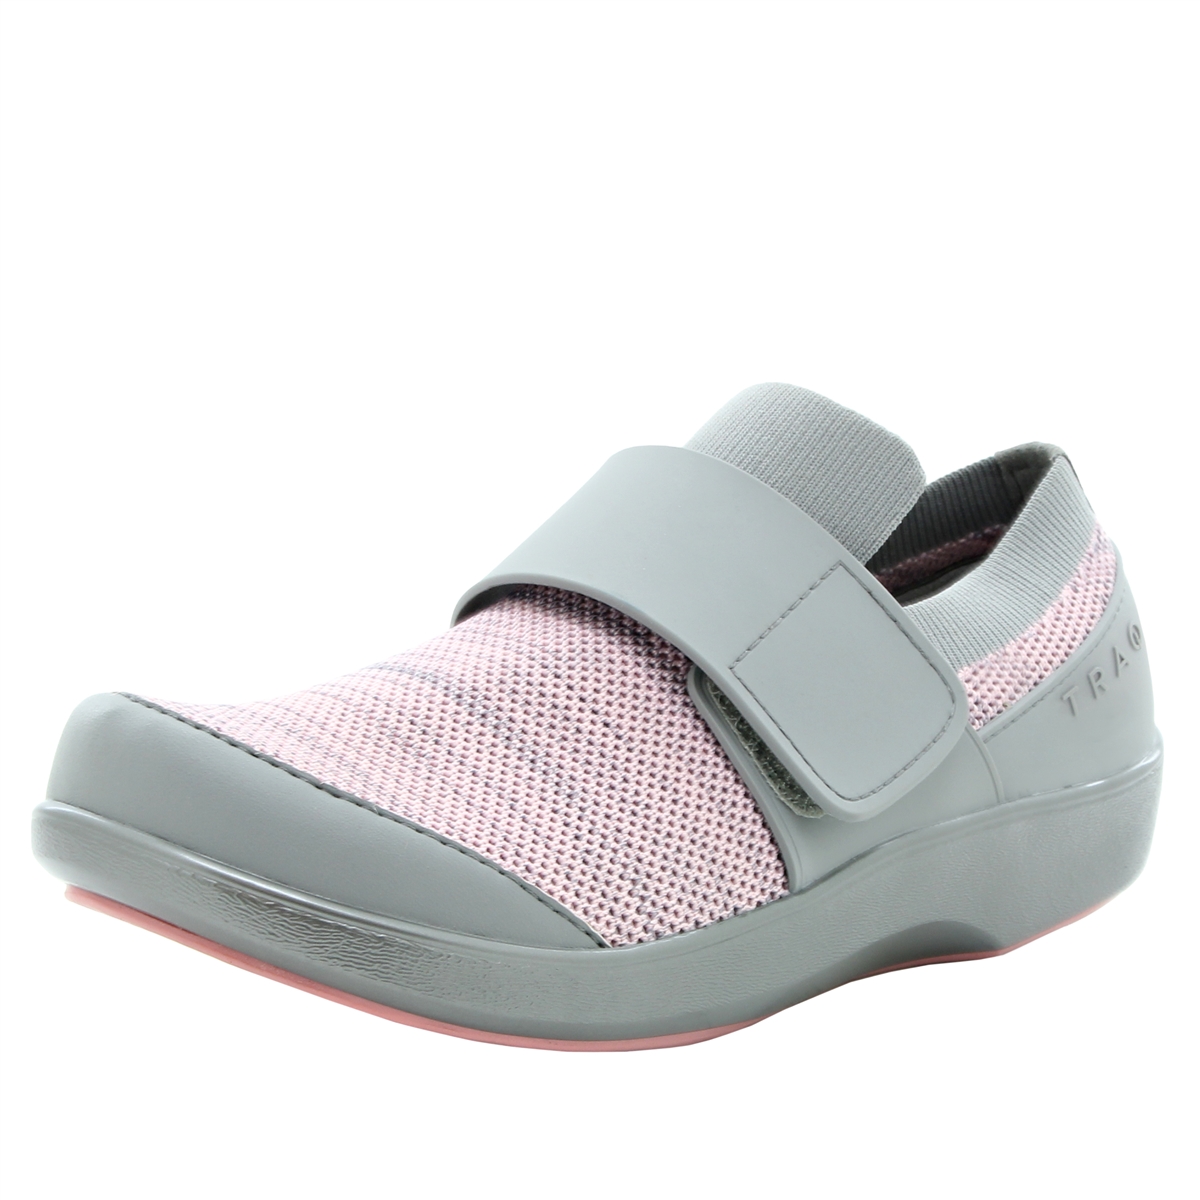 Alegria Shoes - Qwik Pink Multi